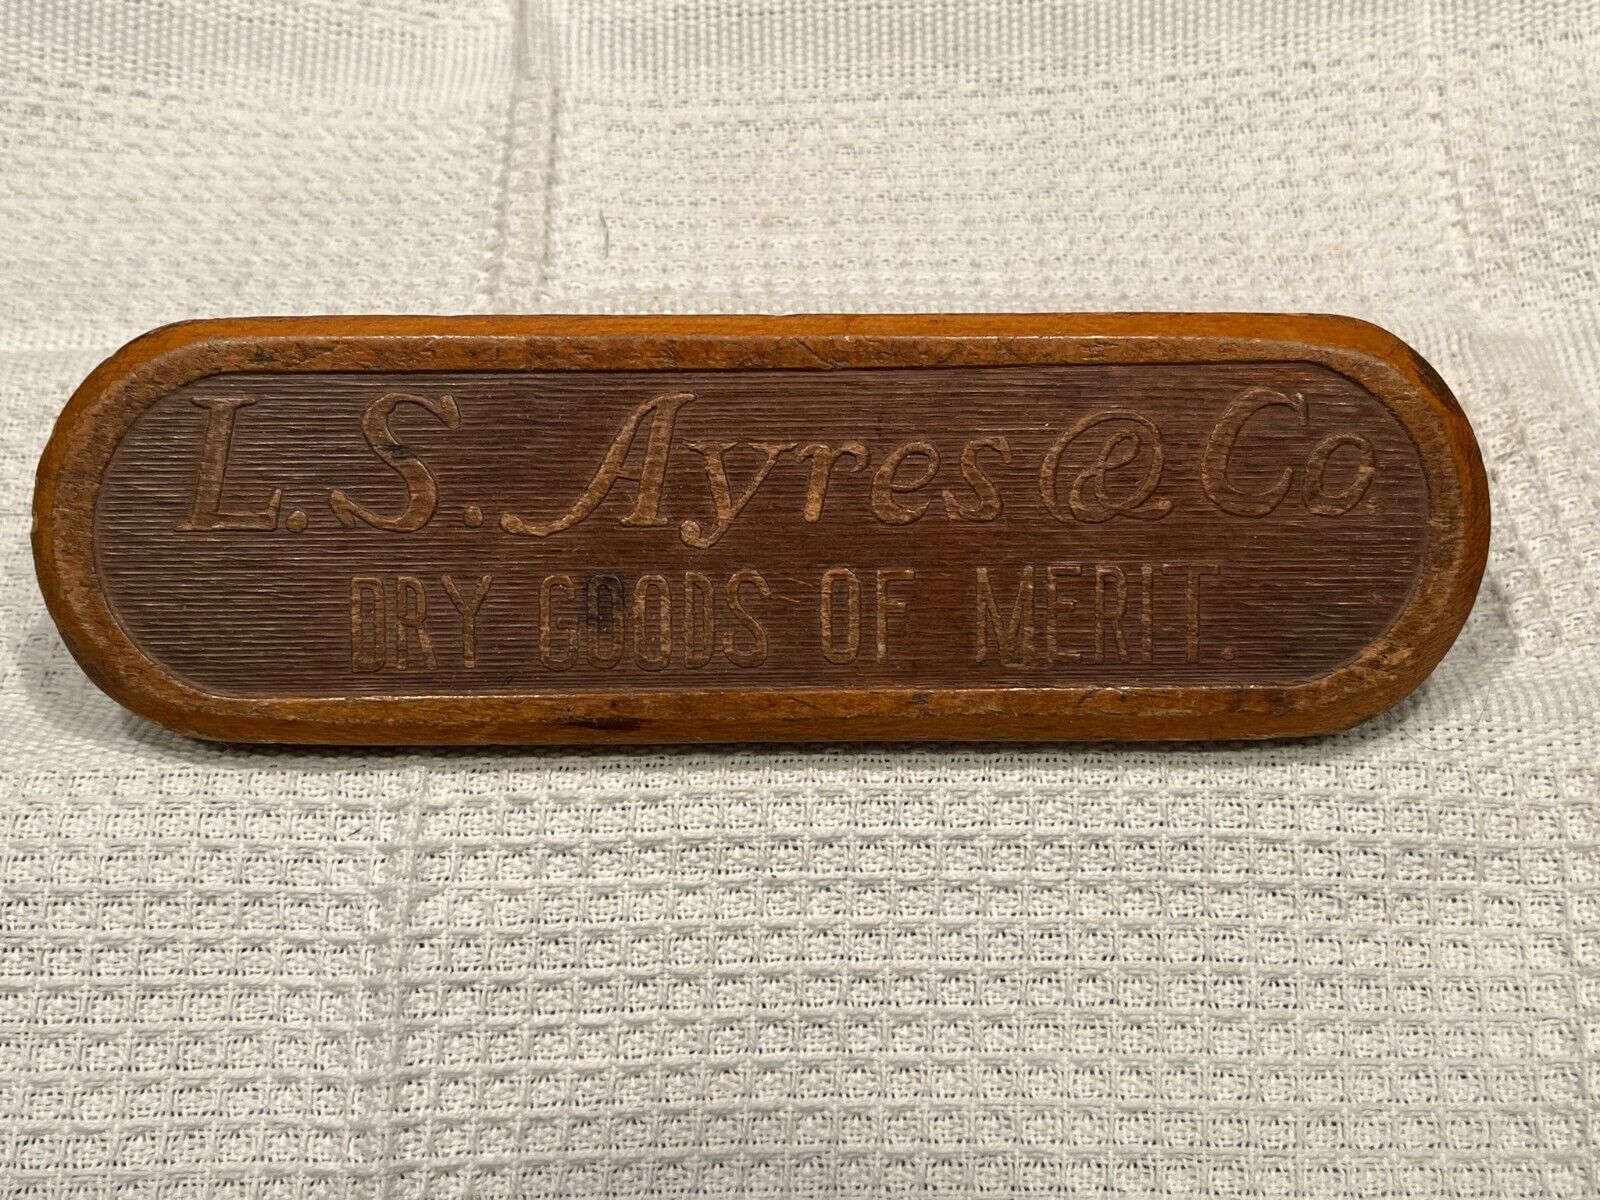 Antique L.S. Ayes & Co. Dry Goods of Merit Advertising Shoe Brush